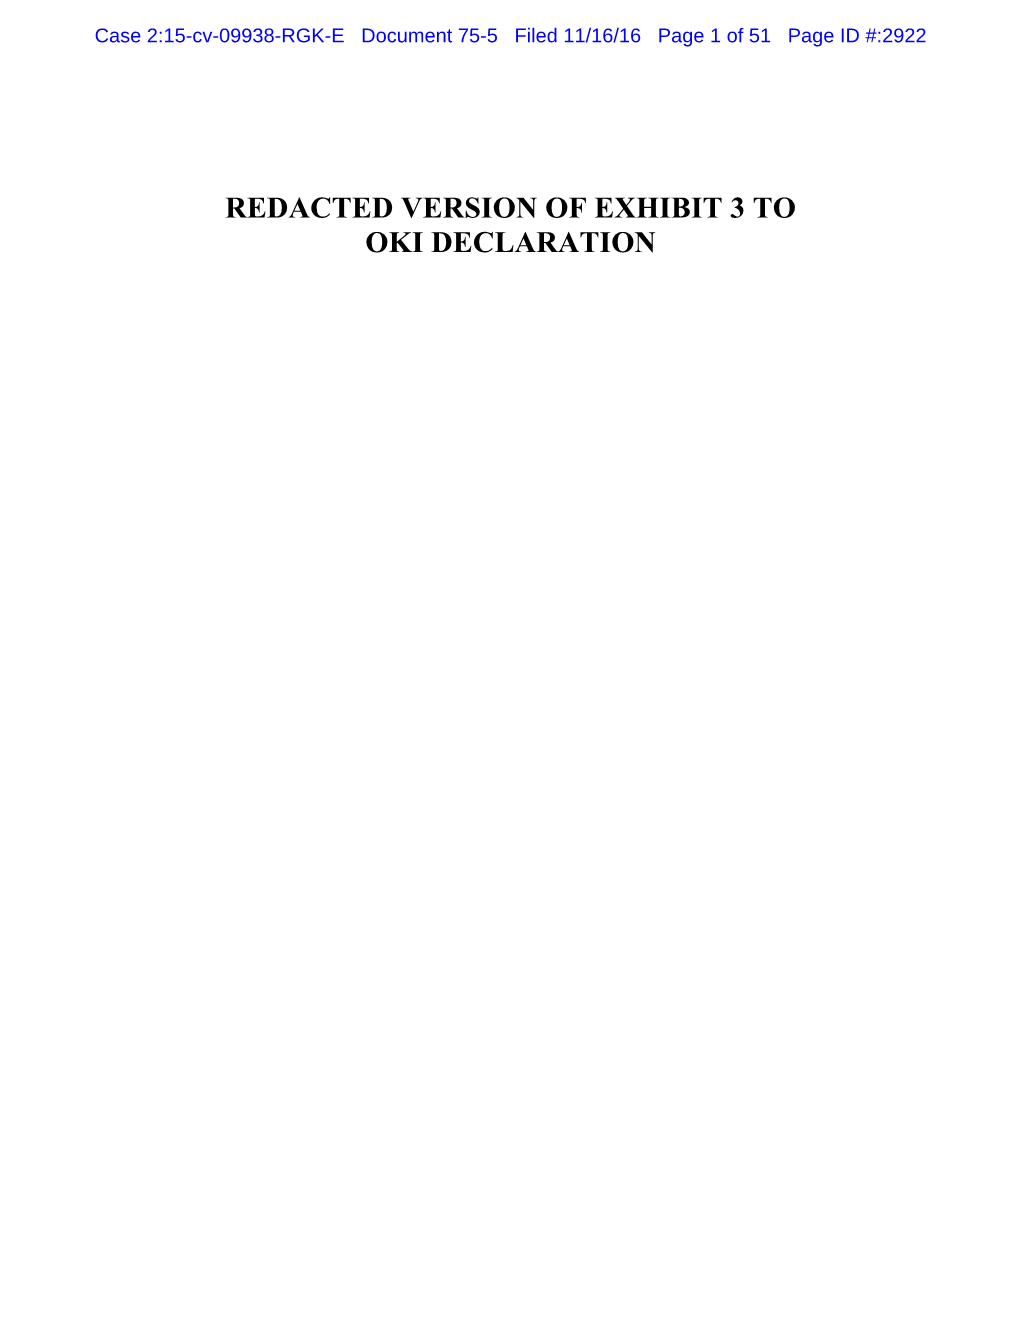 Redacted Version of Exhibit 3 to Oki Declaration